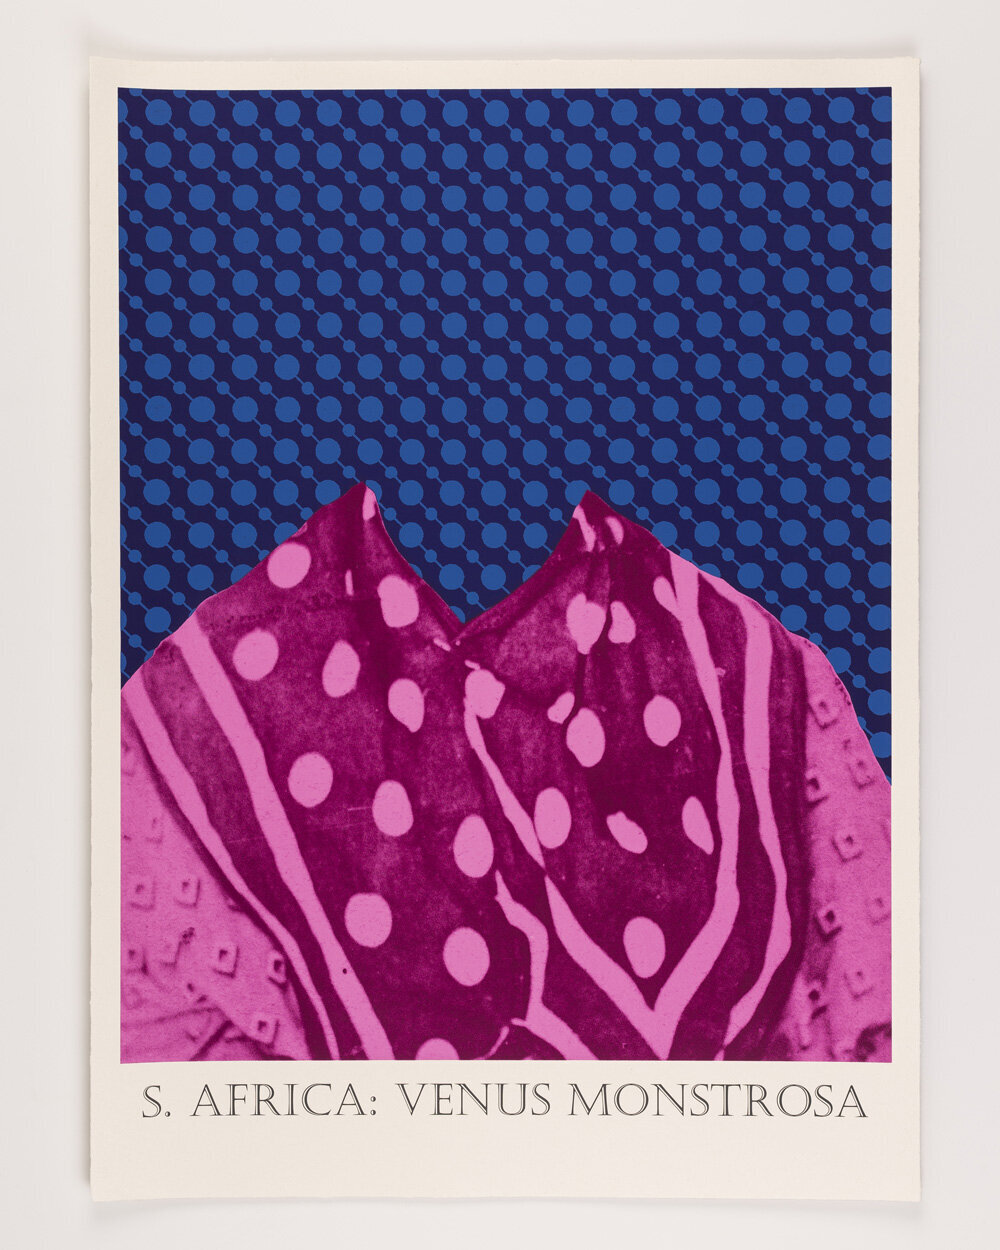 S. Africa: Venus Monstrosa